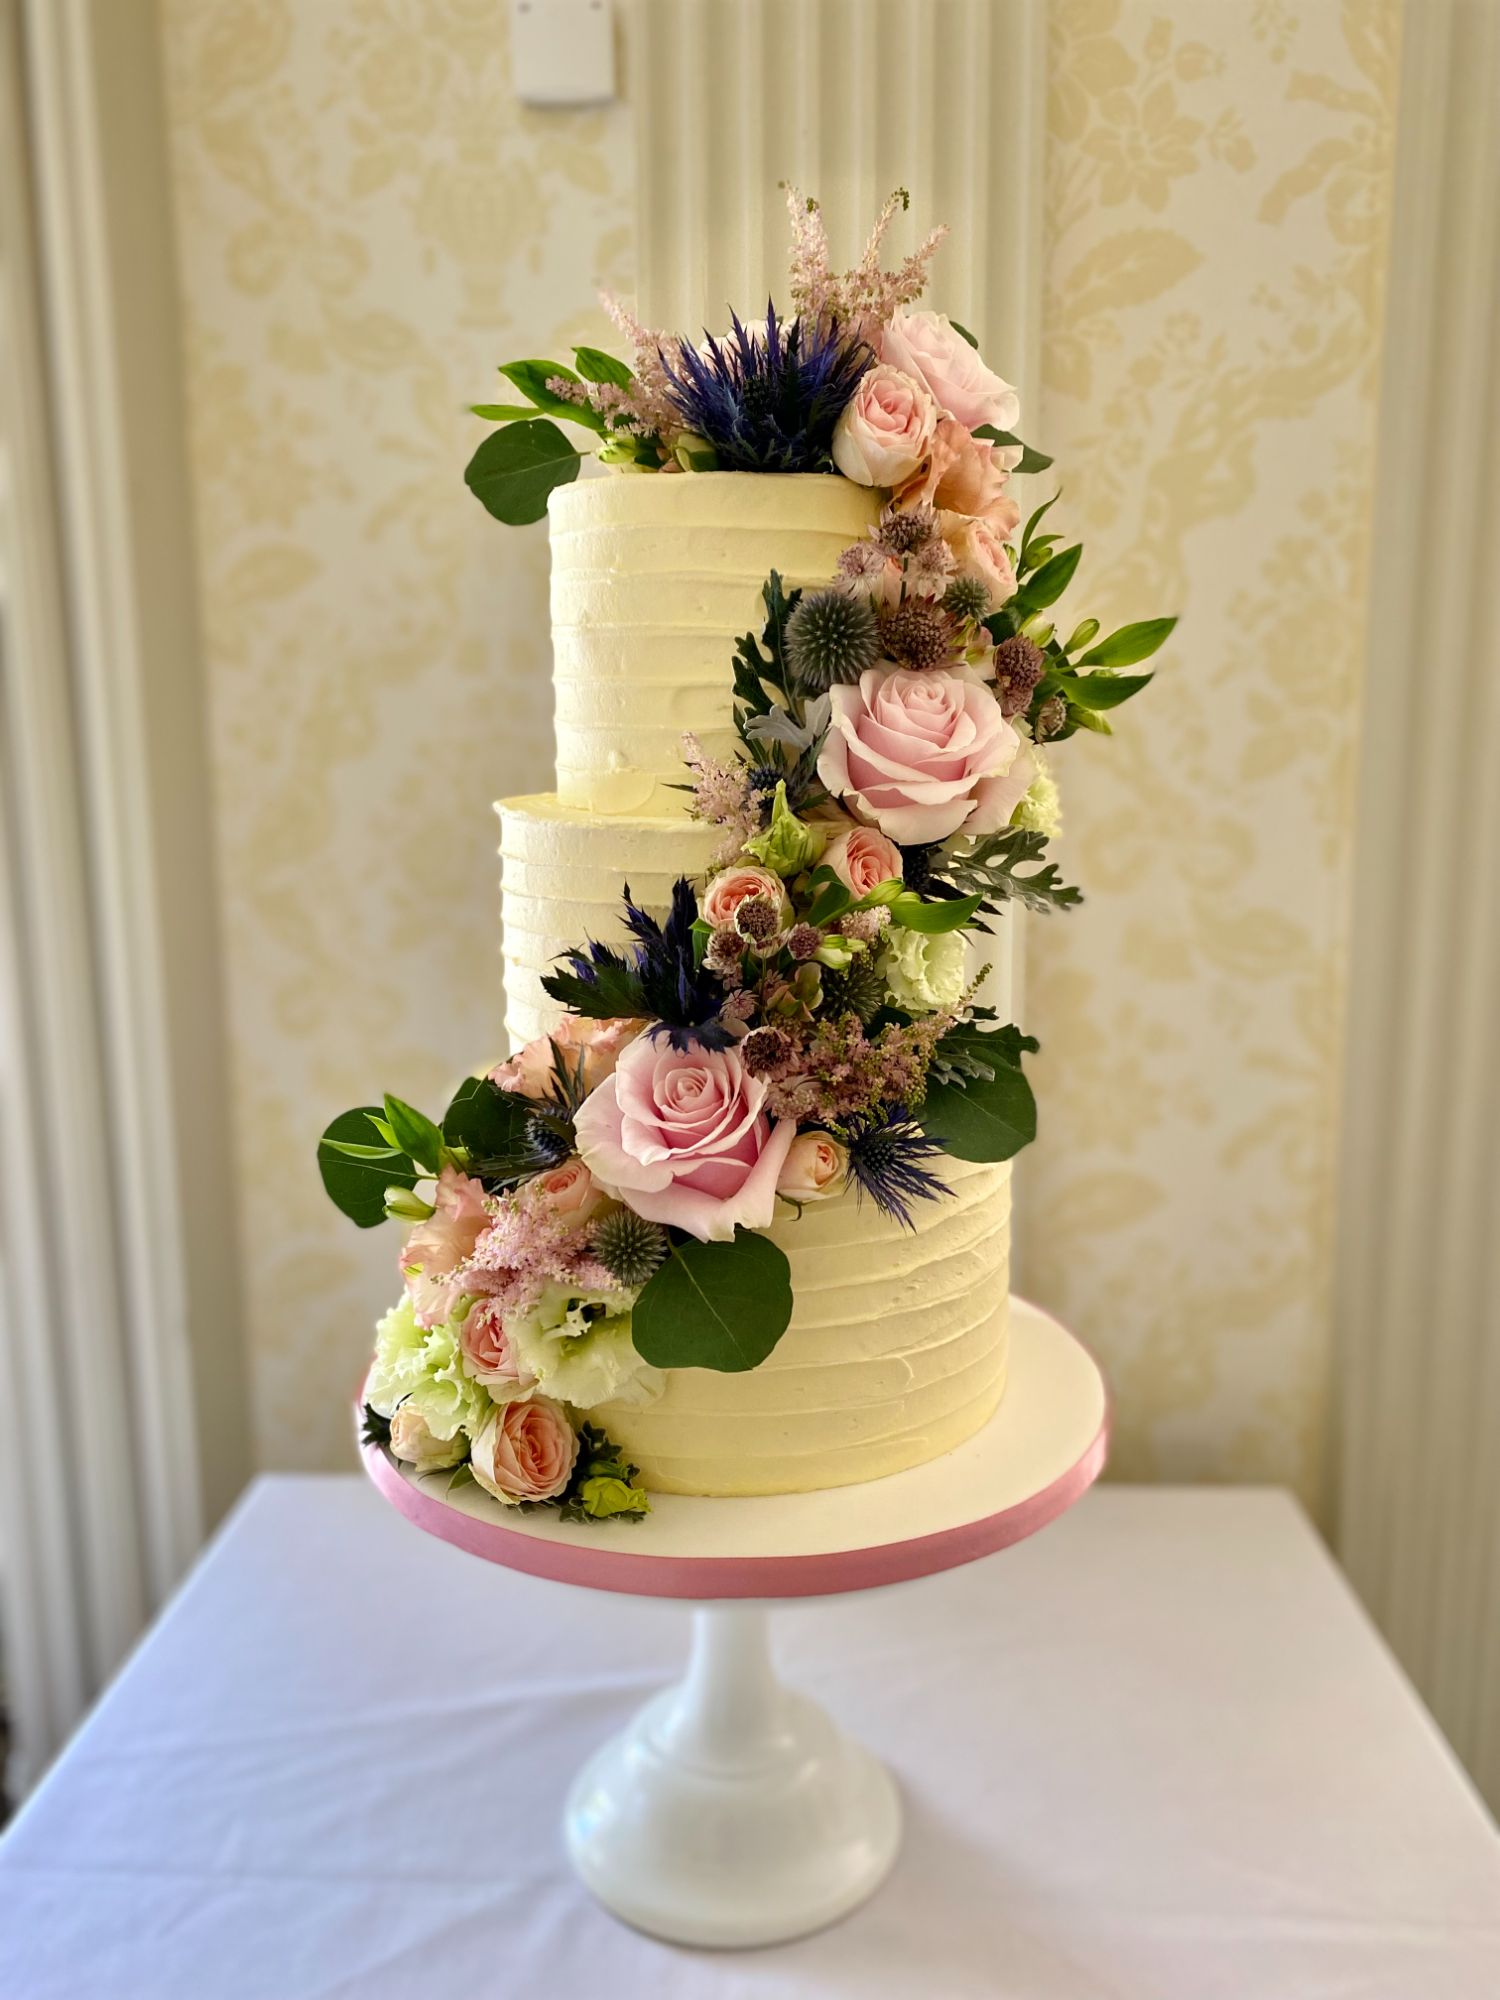 Helen Jane Cake Design, Christchurch, Dorset - wedding cakes (23)